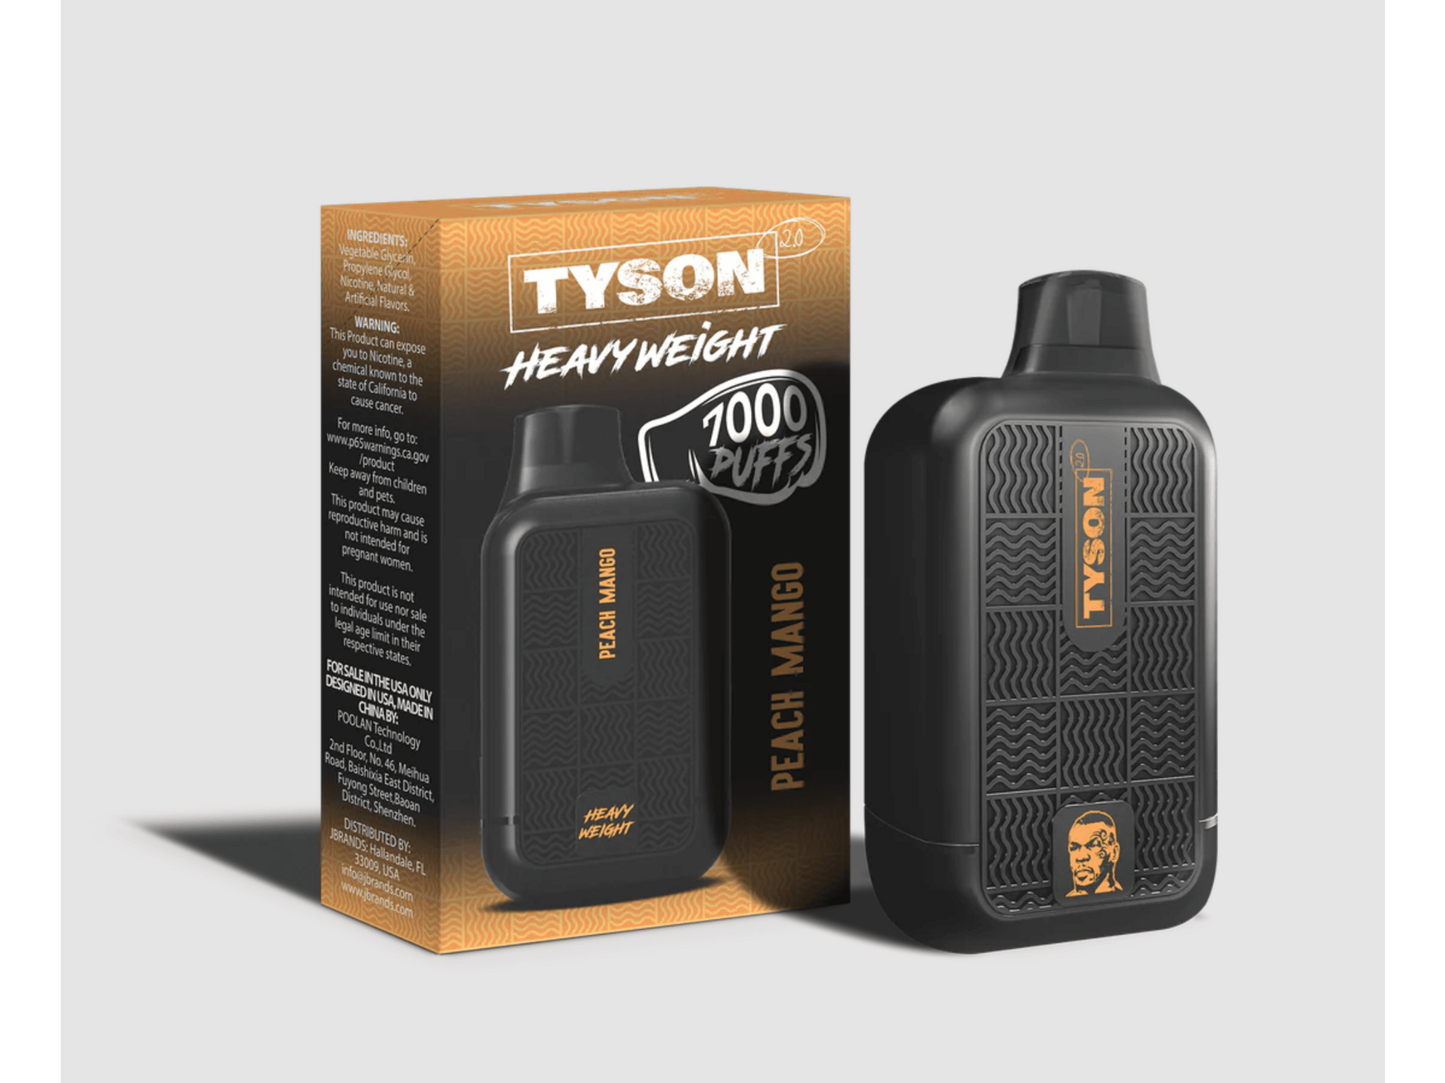 Tyson Heavyweight Peach Mango flavored disposable vape device and box.